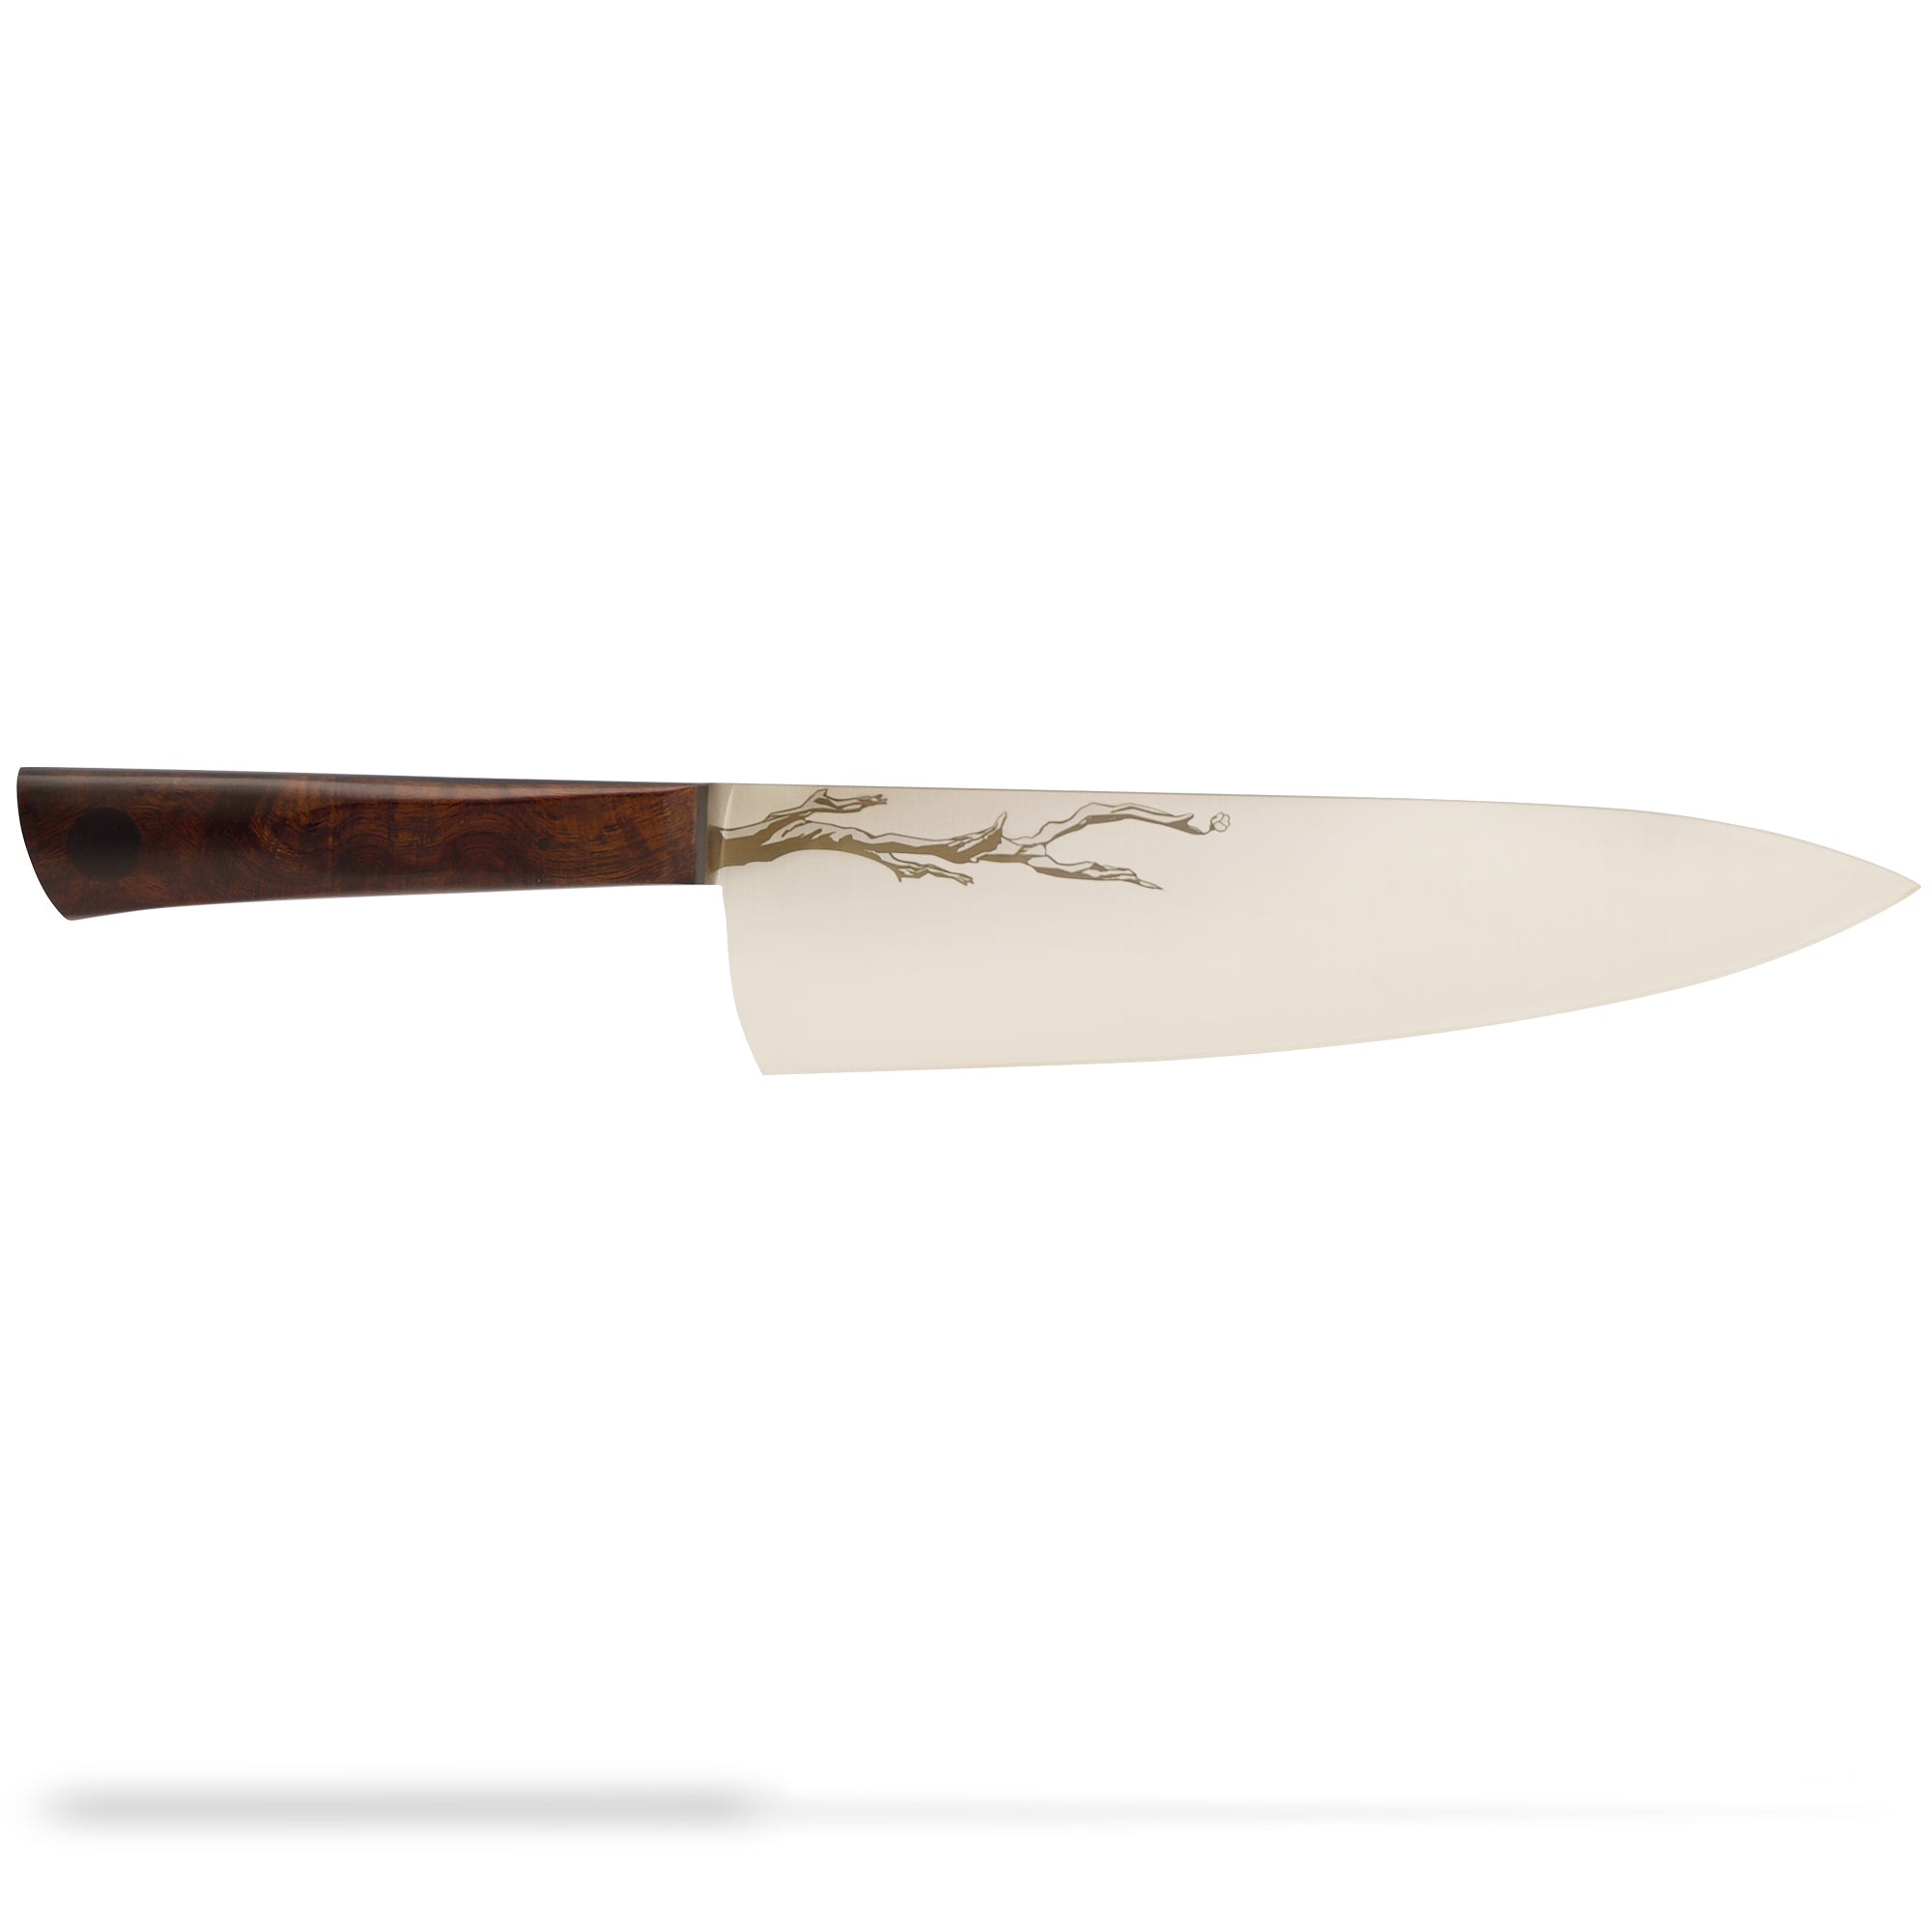 Town Cutler Olneya paring knife with Desert Ironwood branch engraved on backside of knife blade.